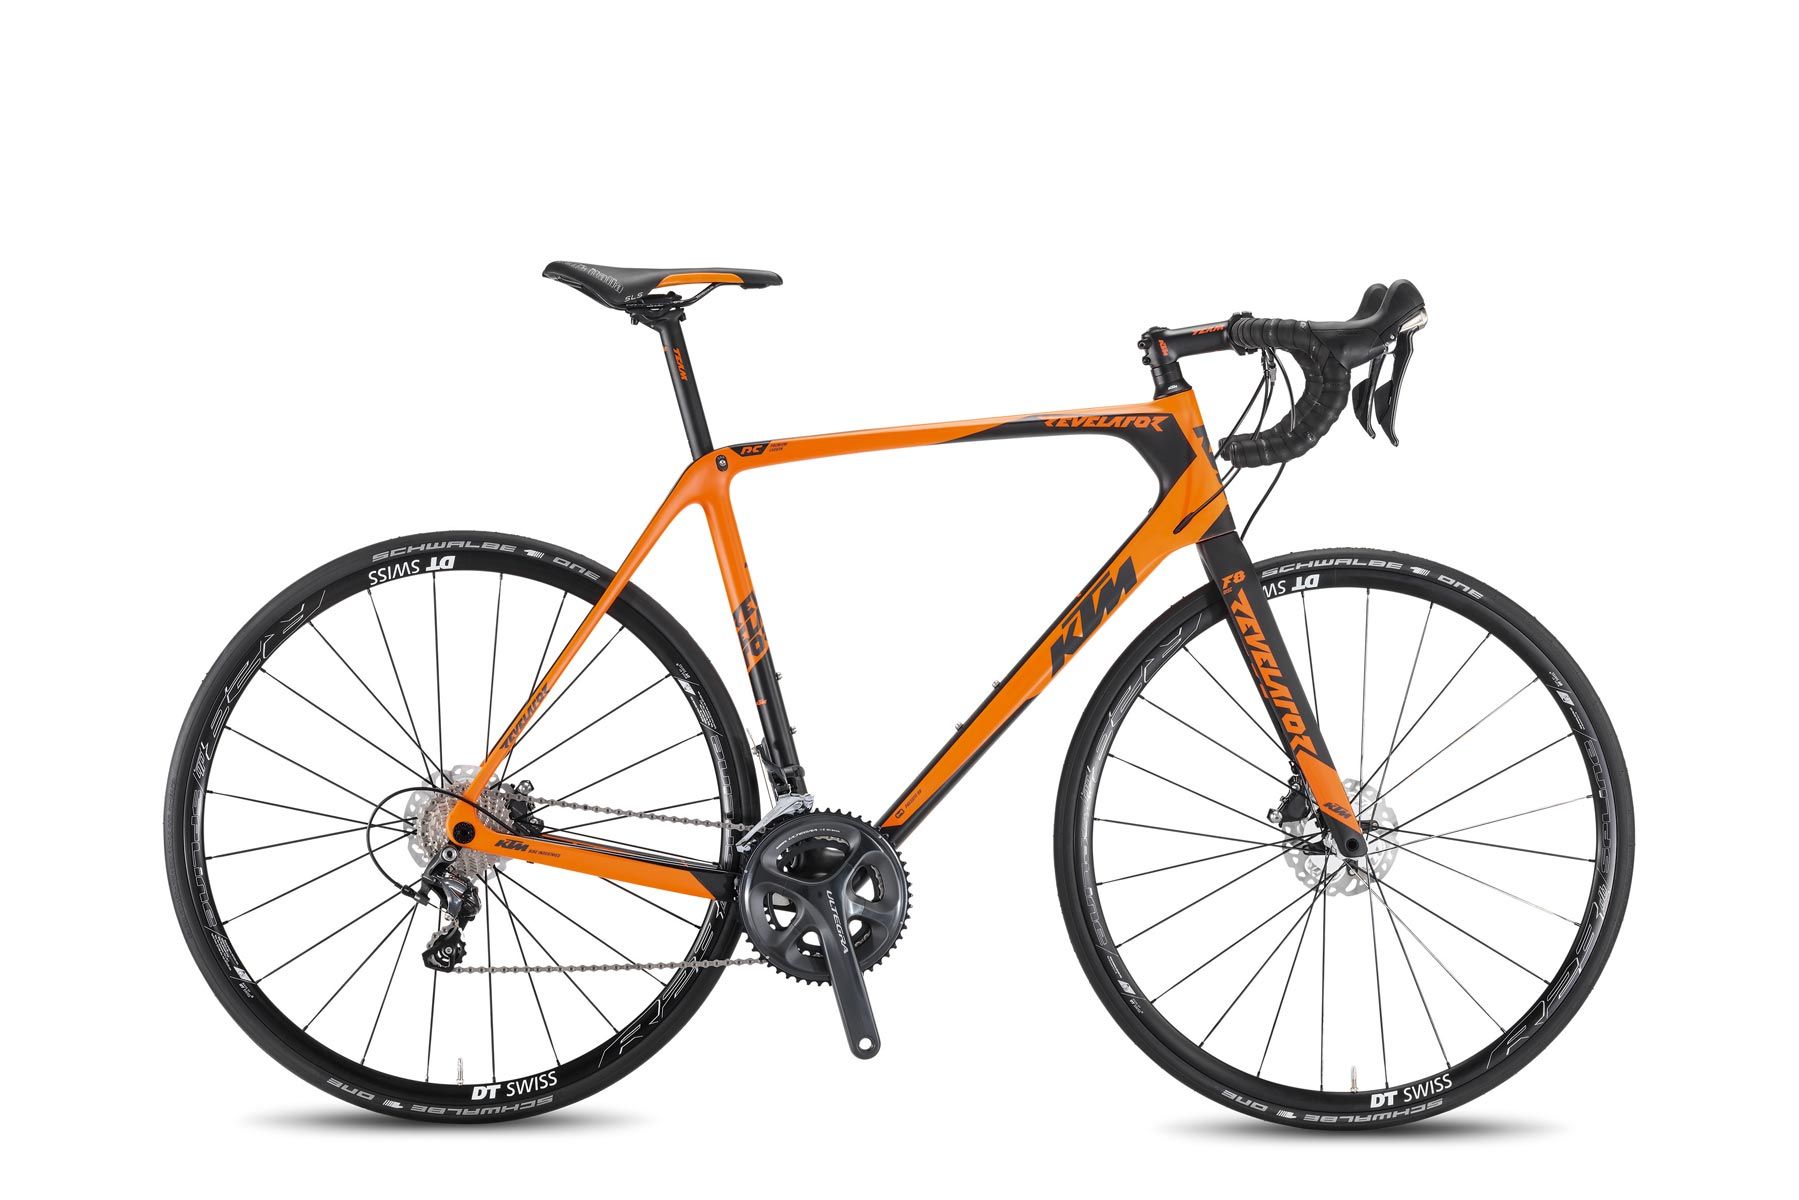  Велосипед KTM Revelator Sky orange 2016